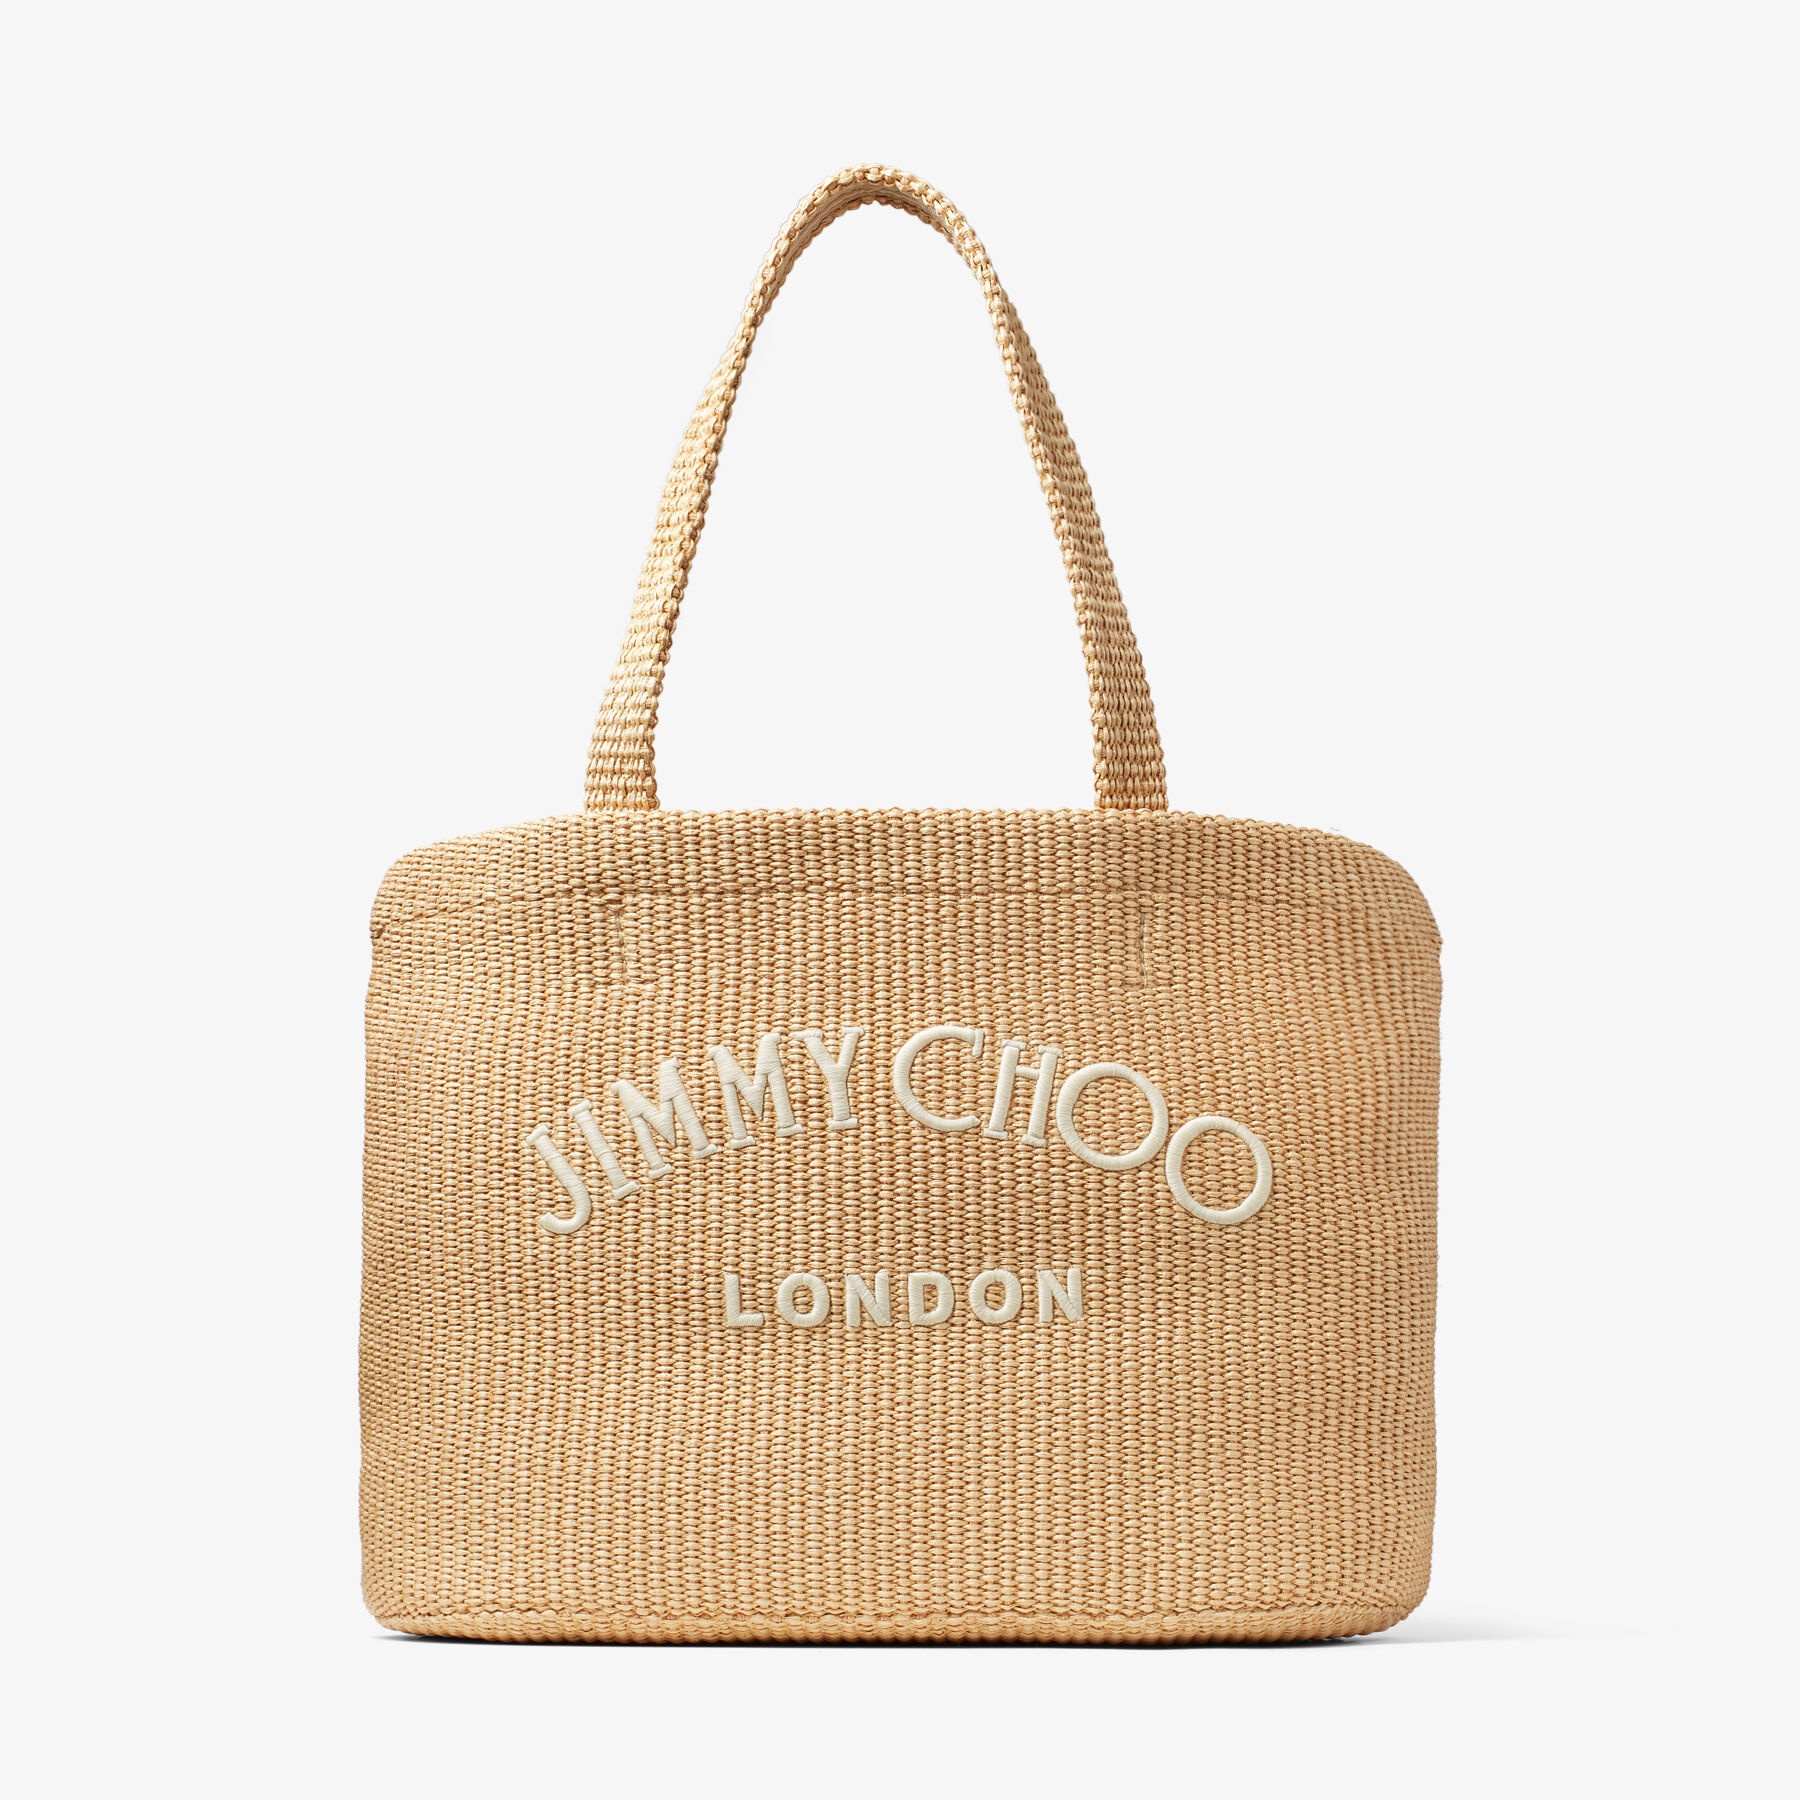 Beach Tote 
Natural Raffia Tote Bag with Jimmy Choo Embroidery - 1